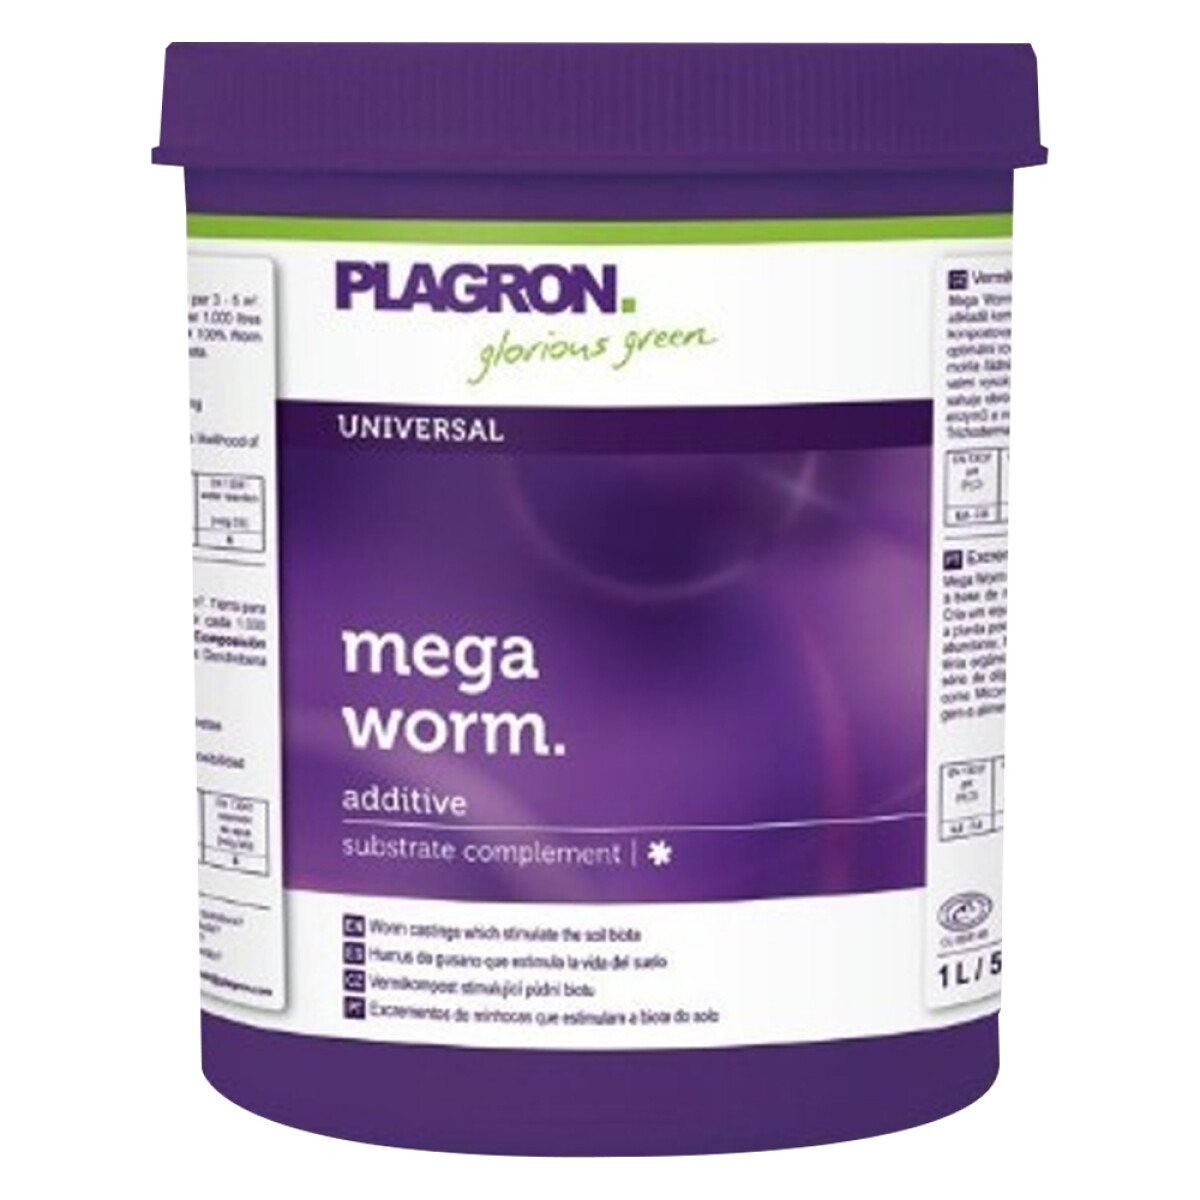 MEGA WORM PLAGRON - 1L 